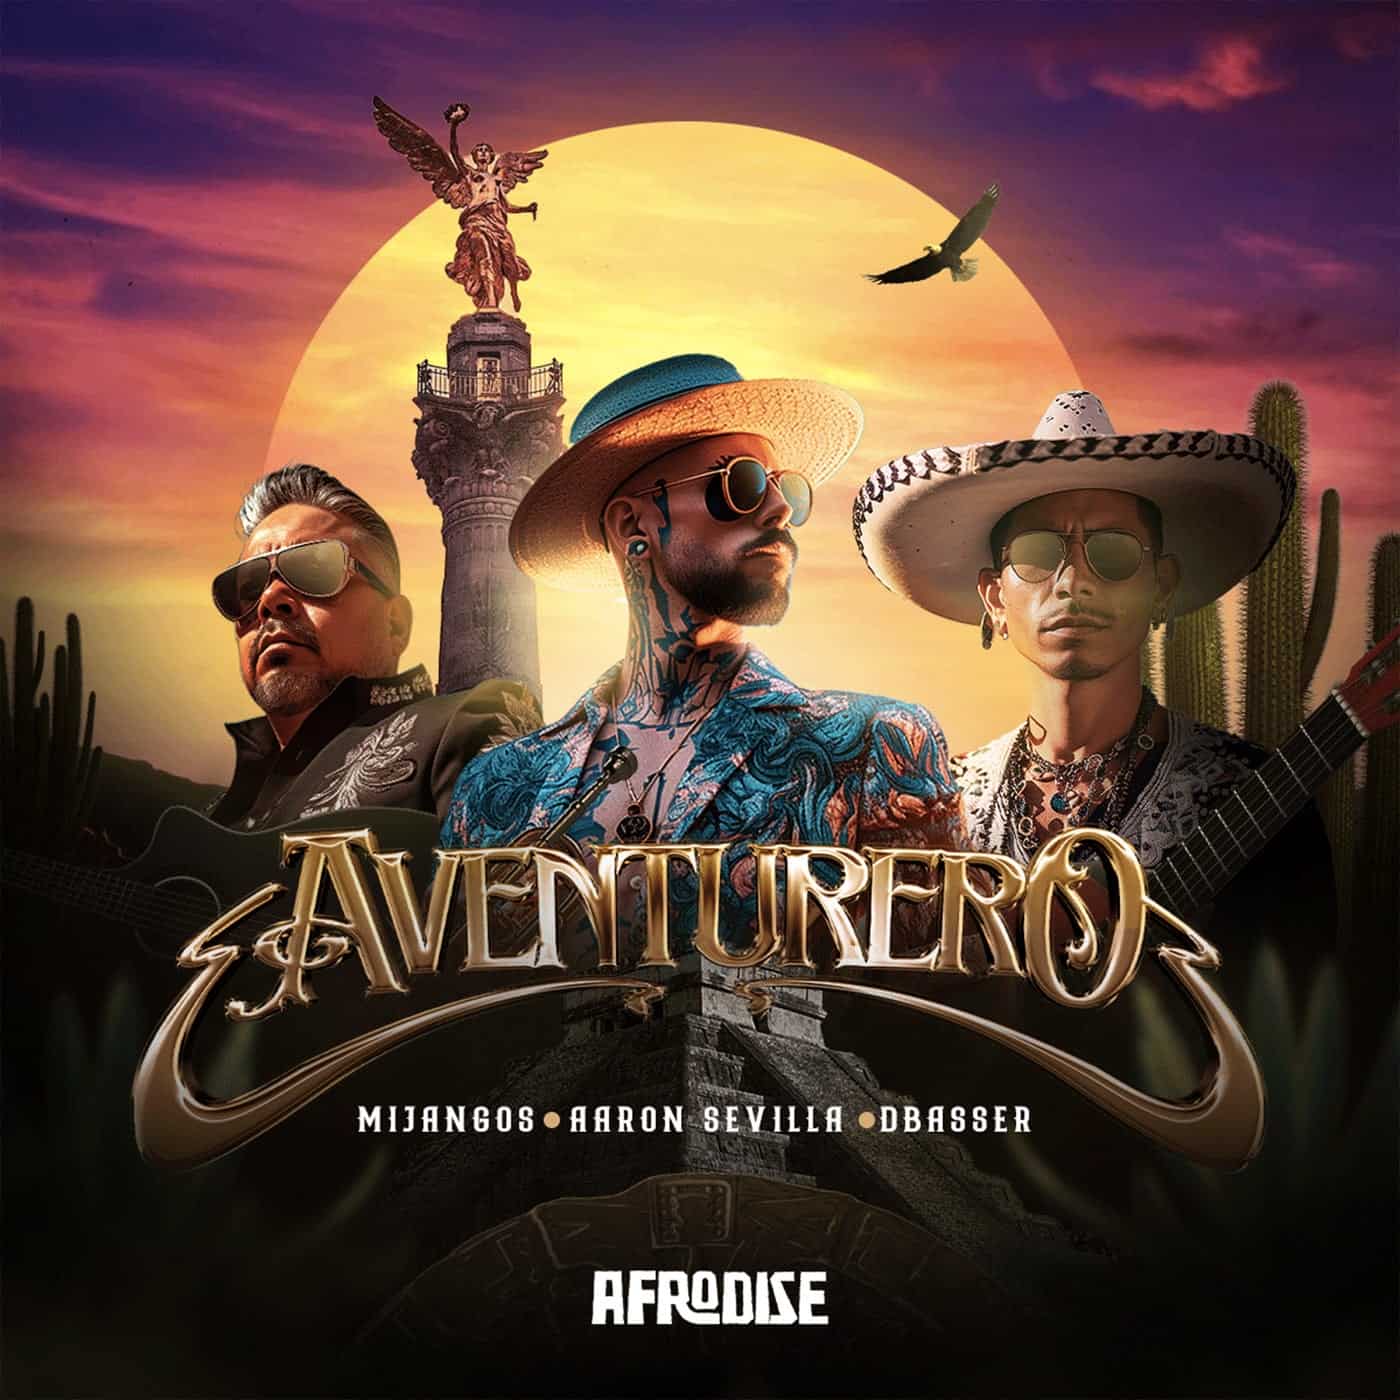 Release Cover: Mijangos, Aaron Sevilla, dbasser - Aventurero on Electrobuzz